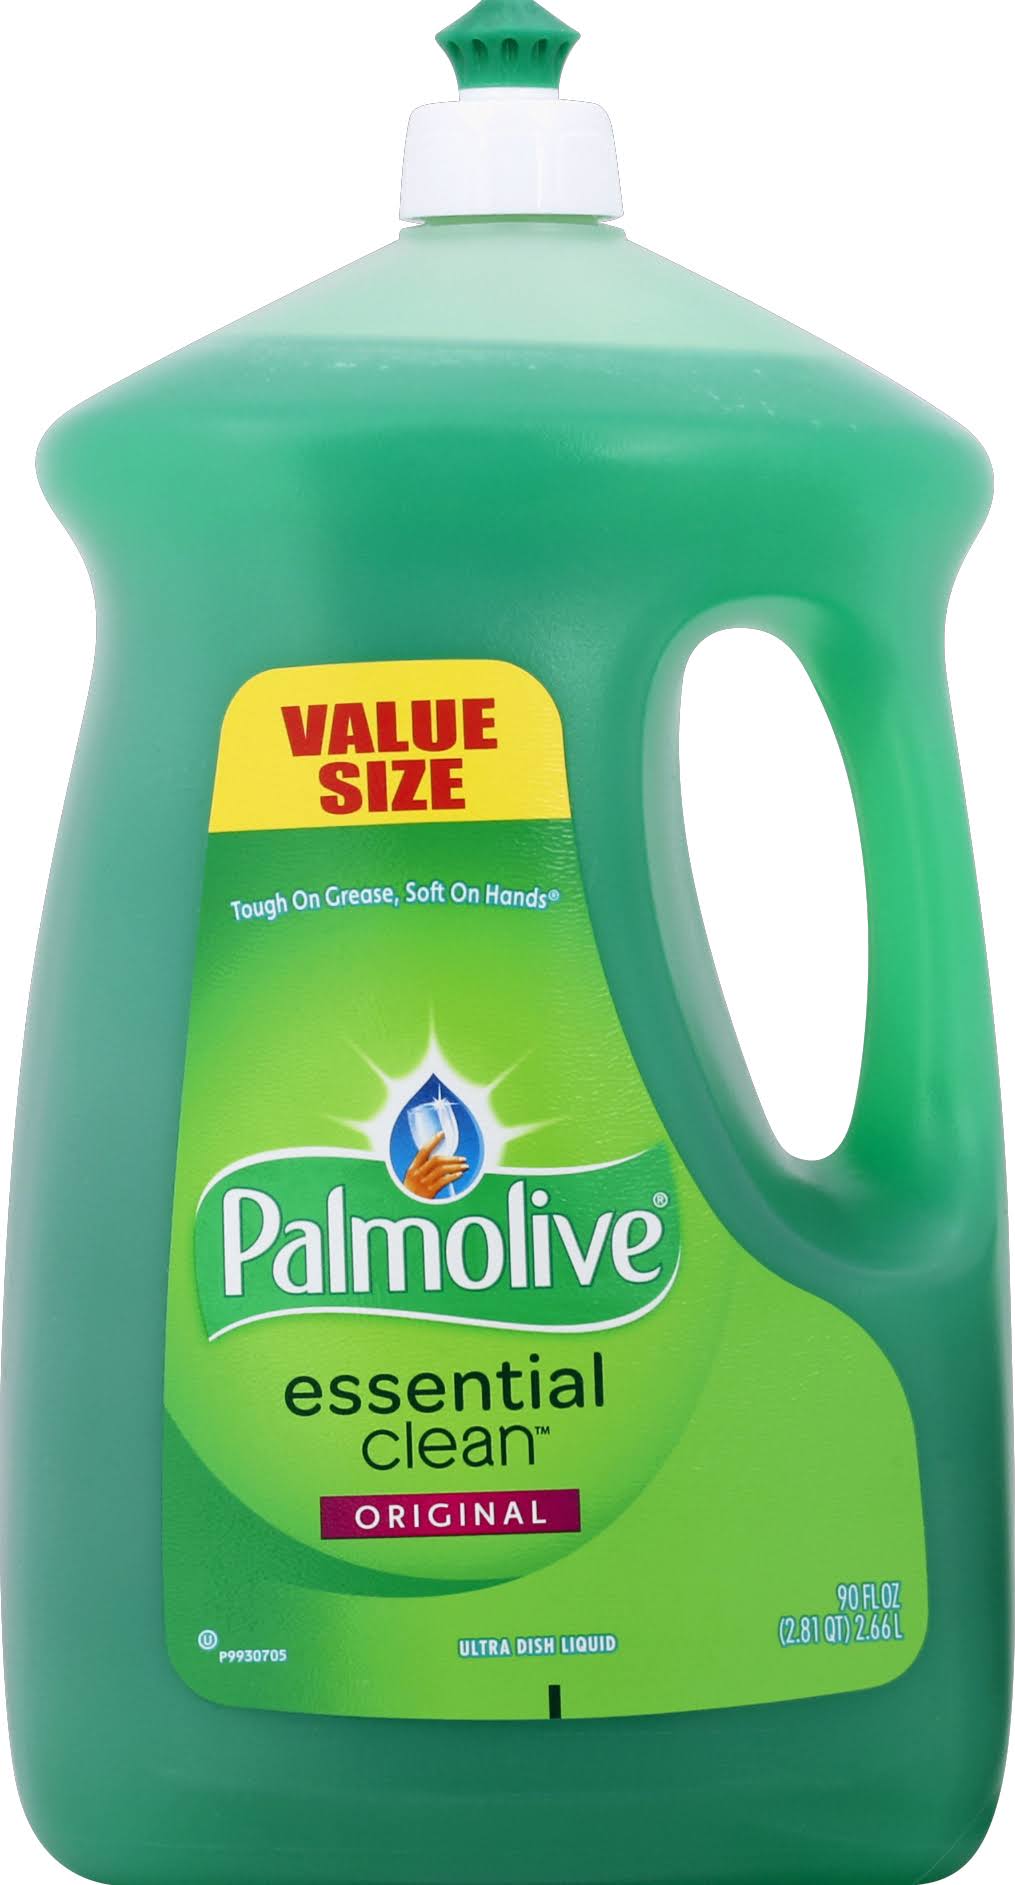 Palmolive Dishwashing Liquid - Original Scent, 90oz